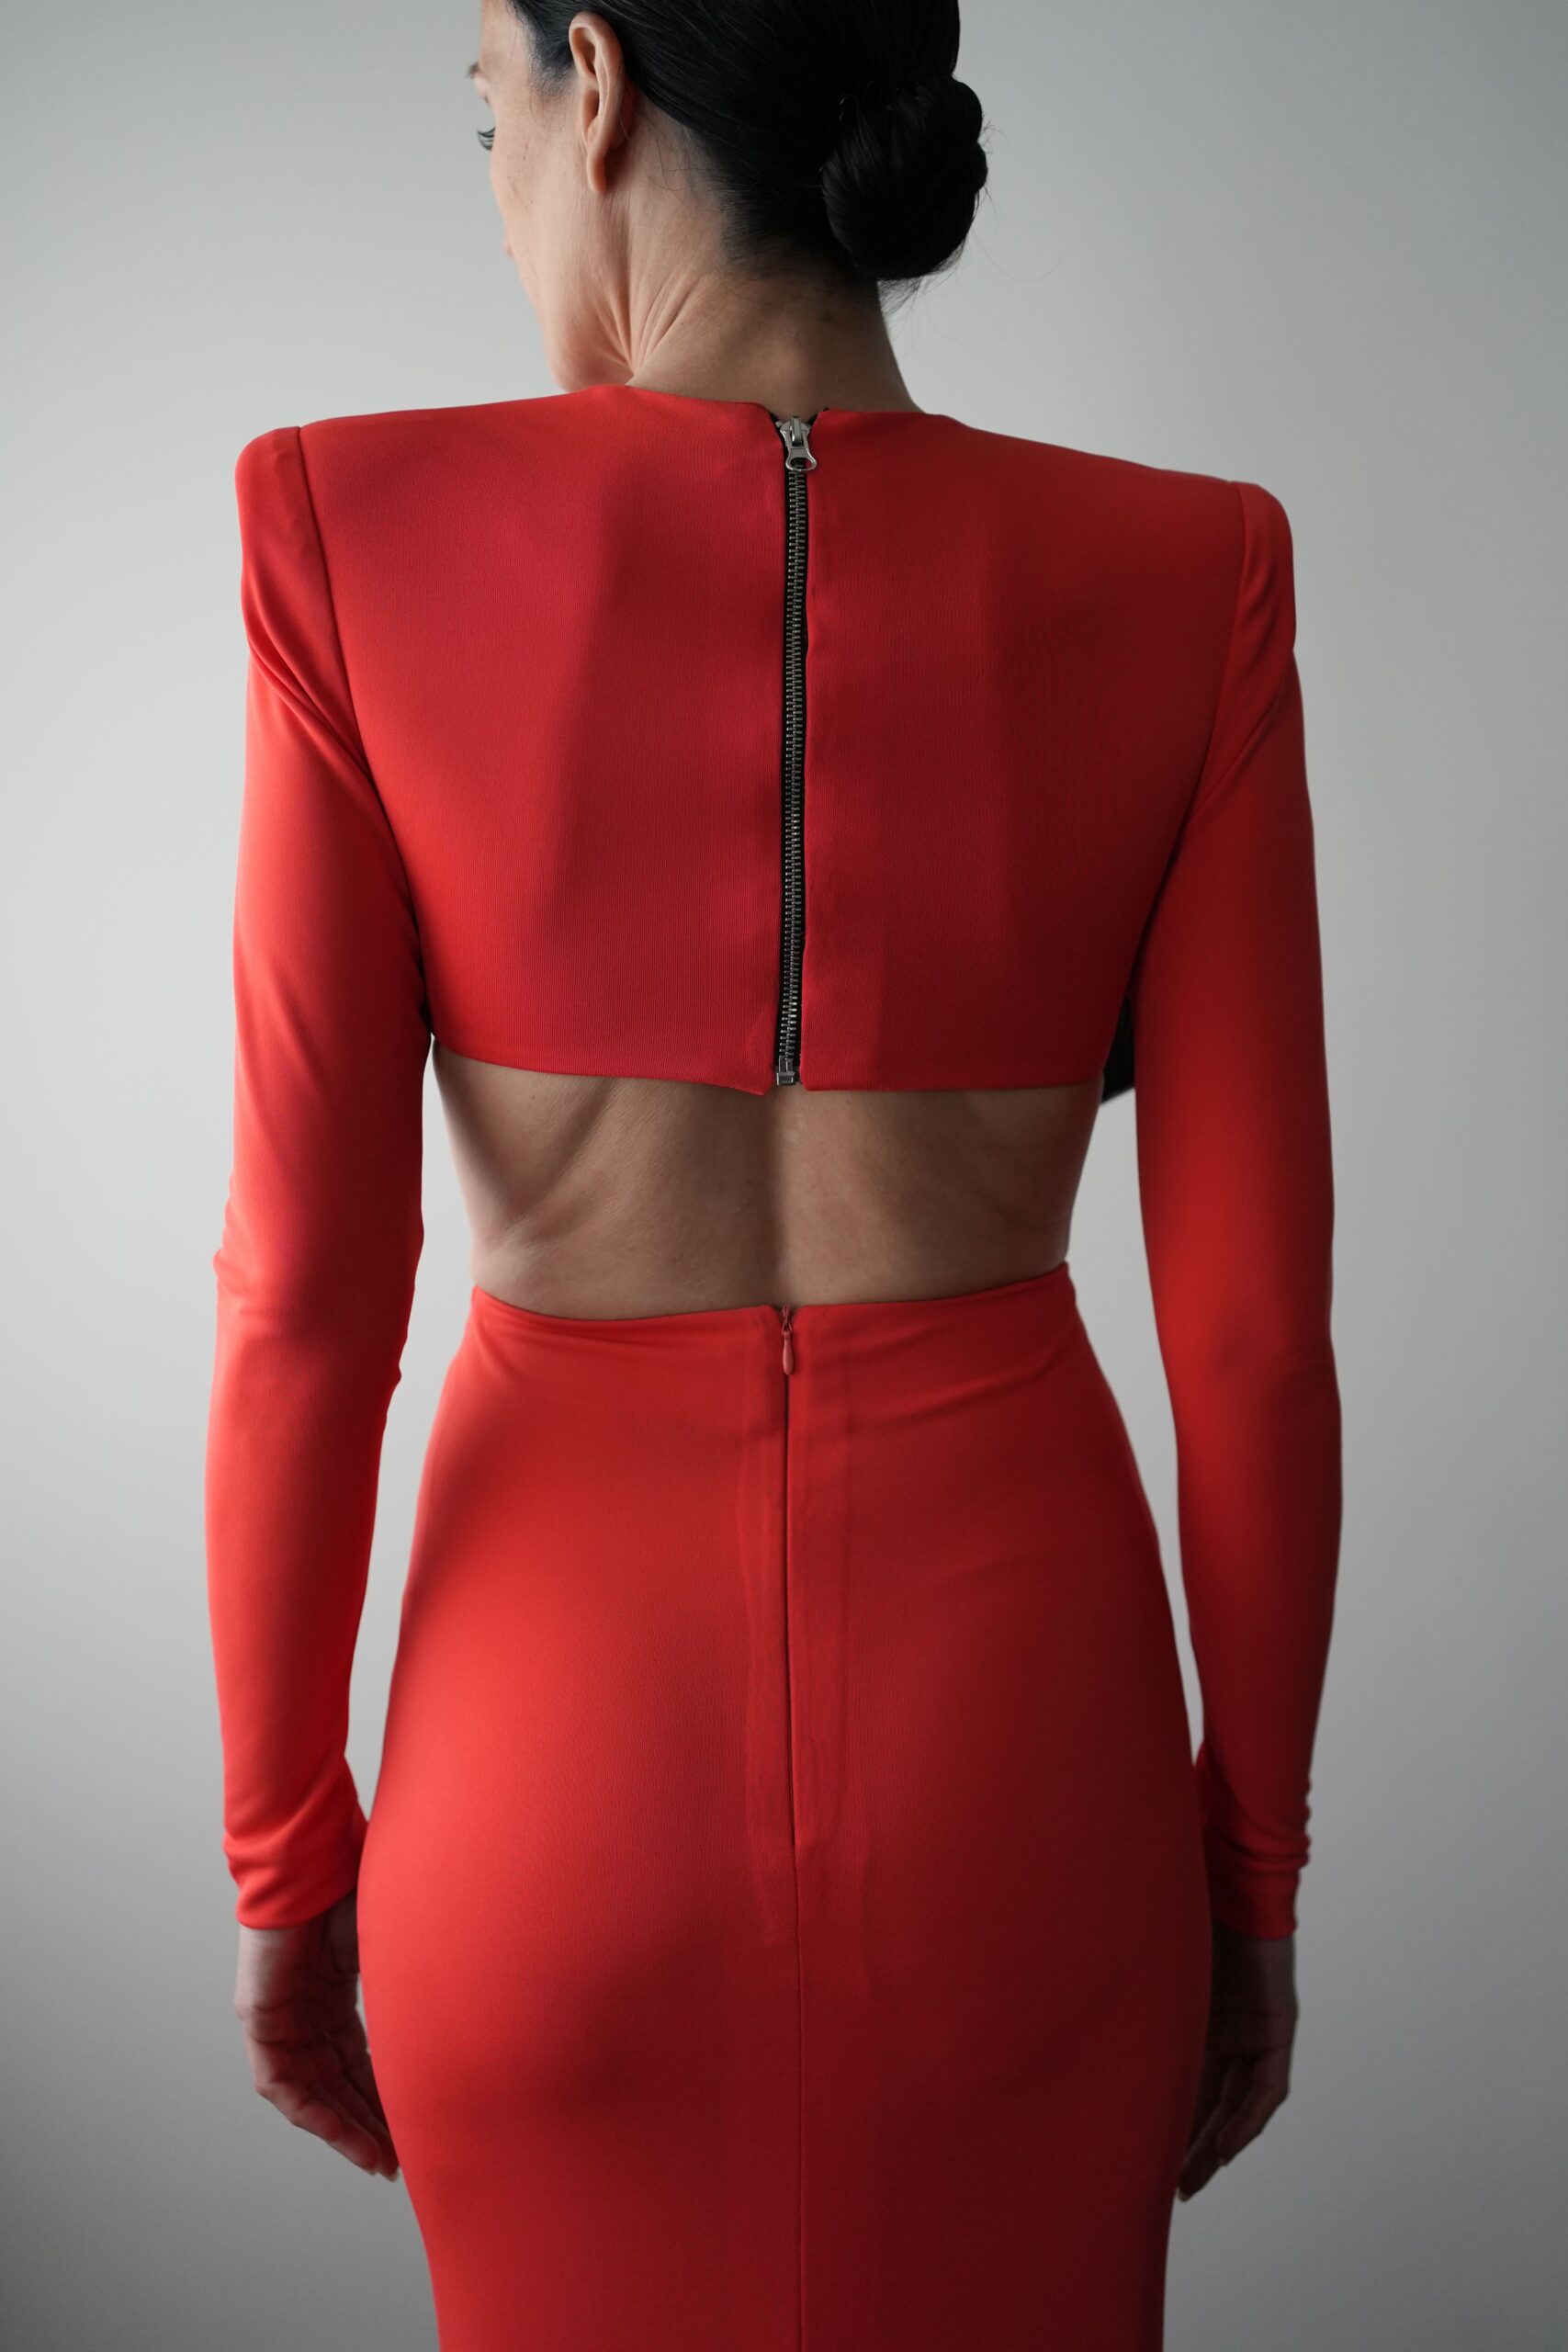 187-Bow-dress-Veintitres.01-Collection-Flamenco-Fashion-1.jpg